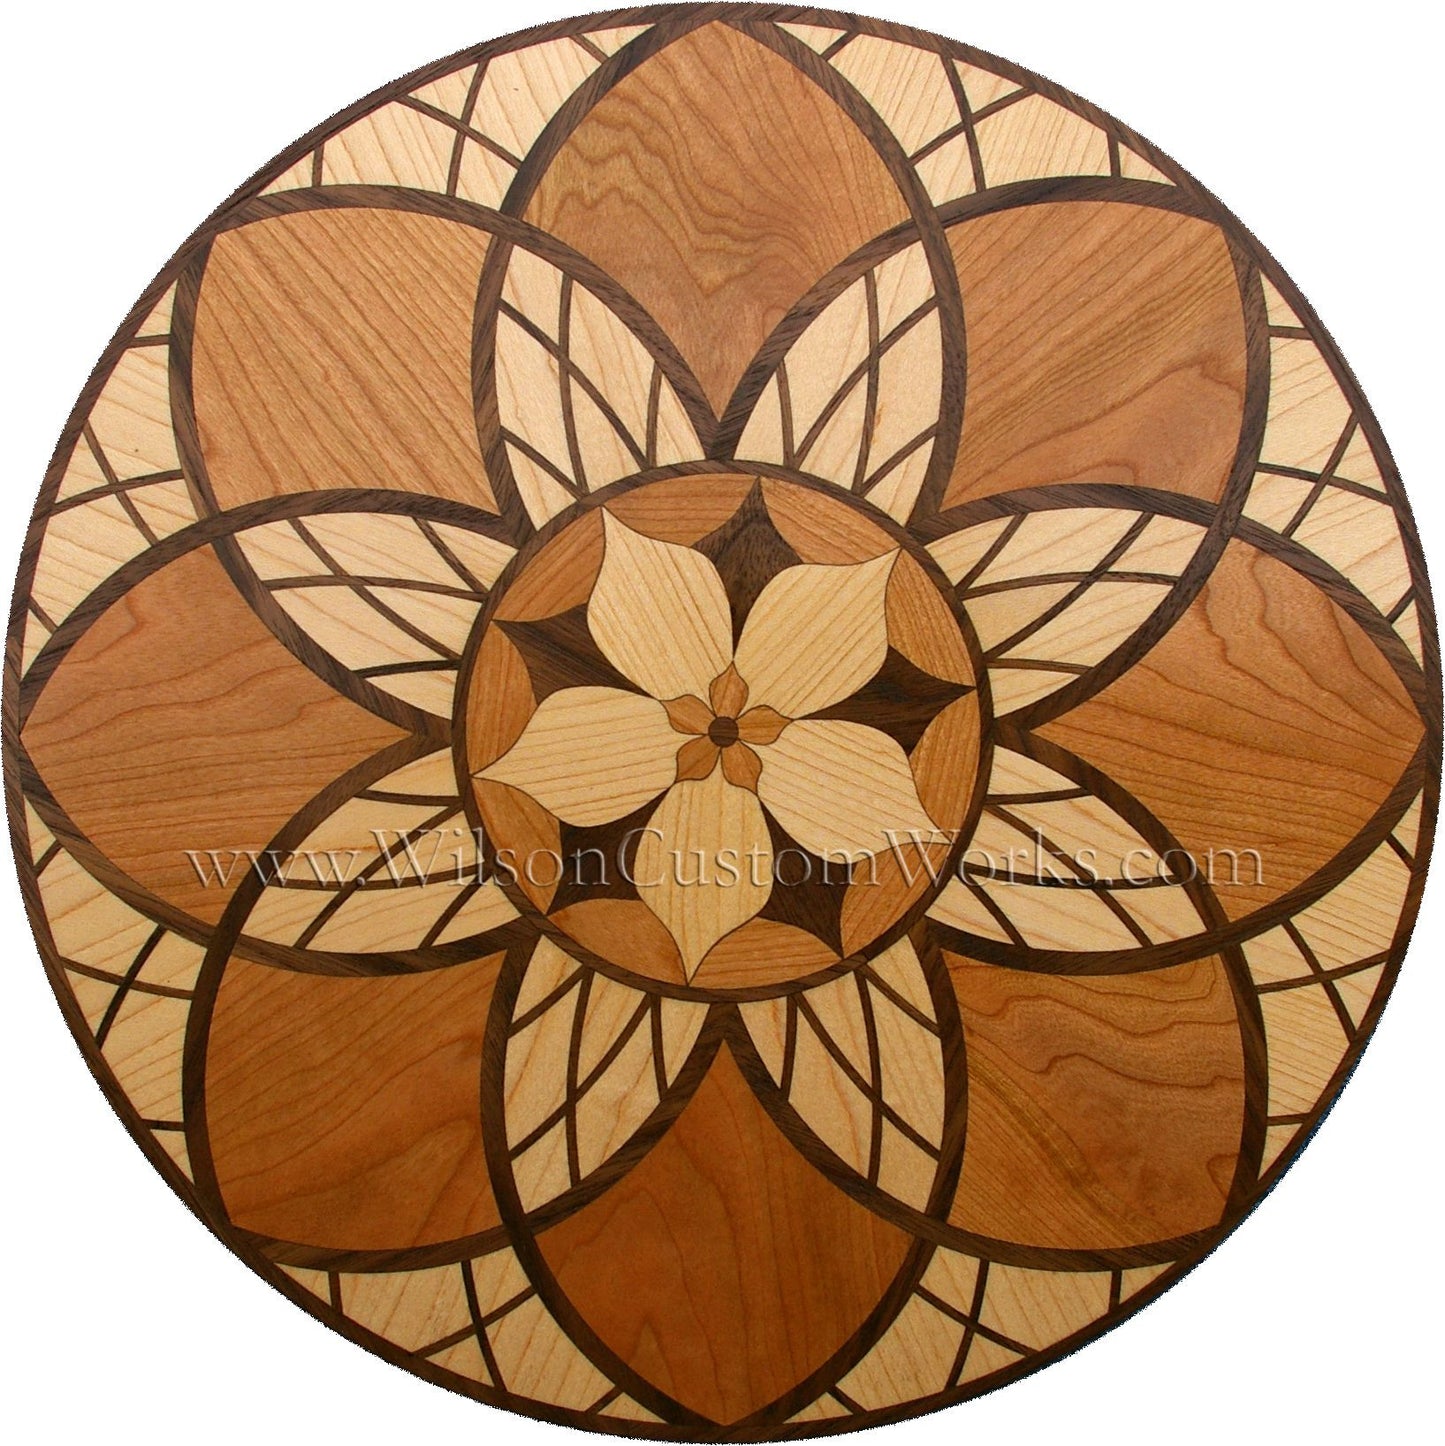 Wilson Custom Works hardwood wood floor inlay medallion cathedral design